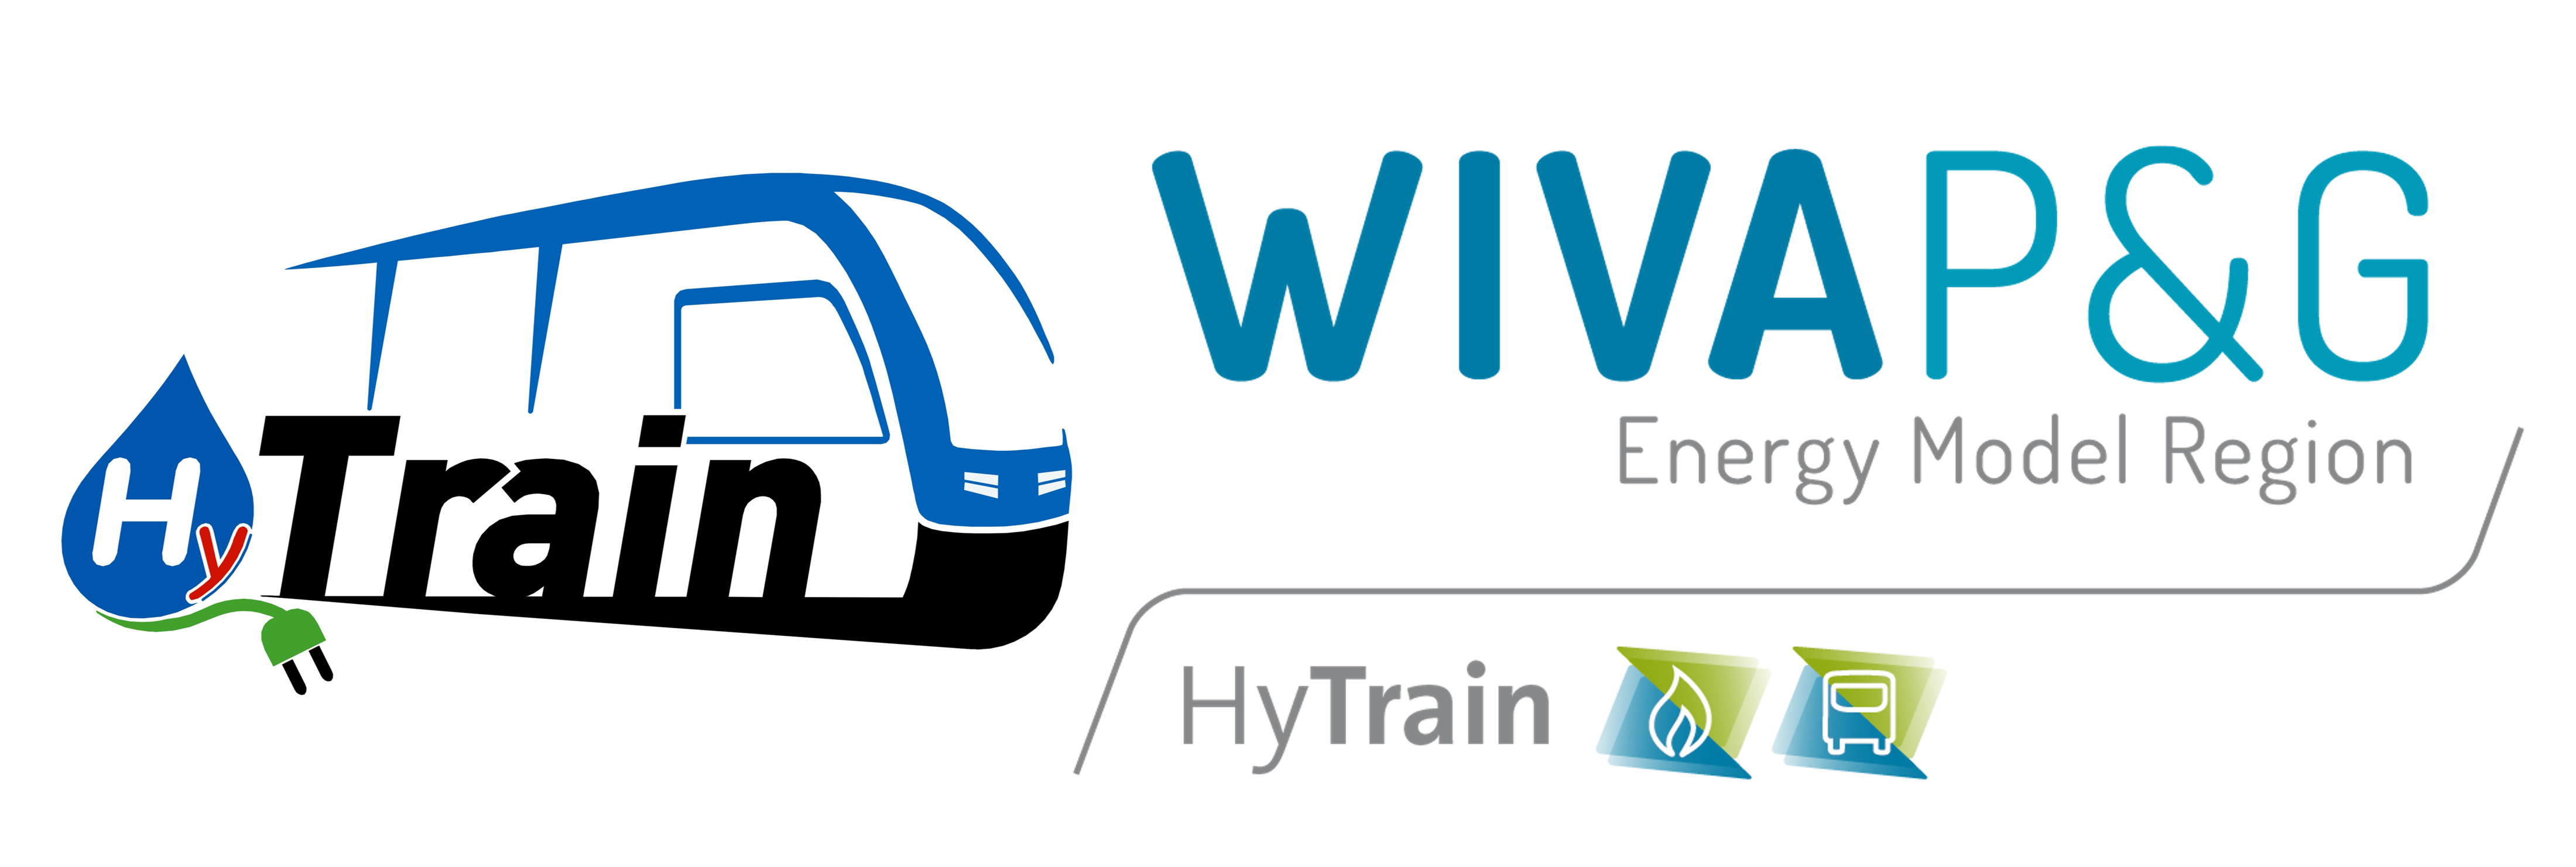 HyTrain Logo